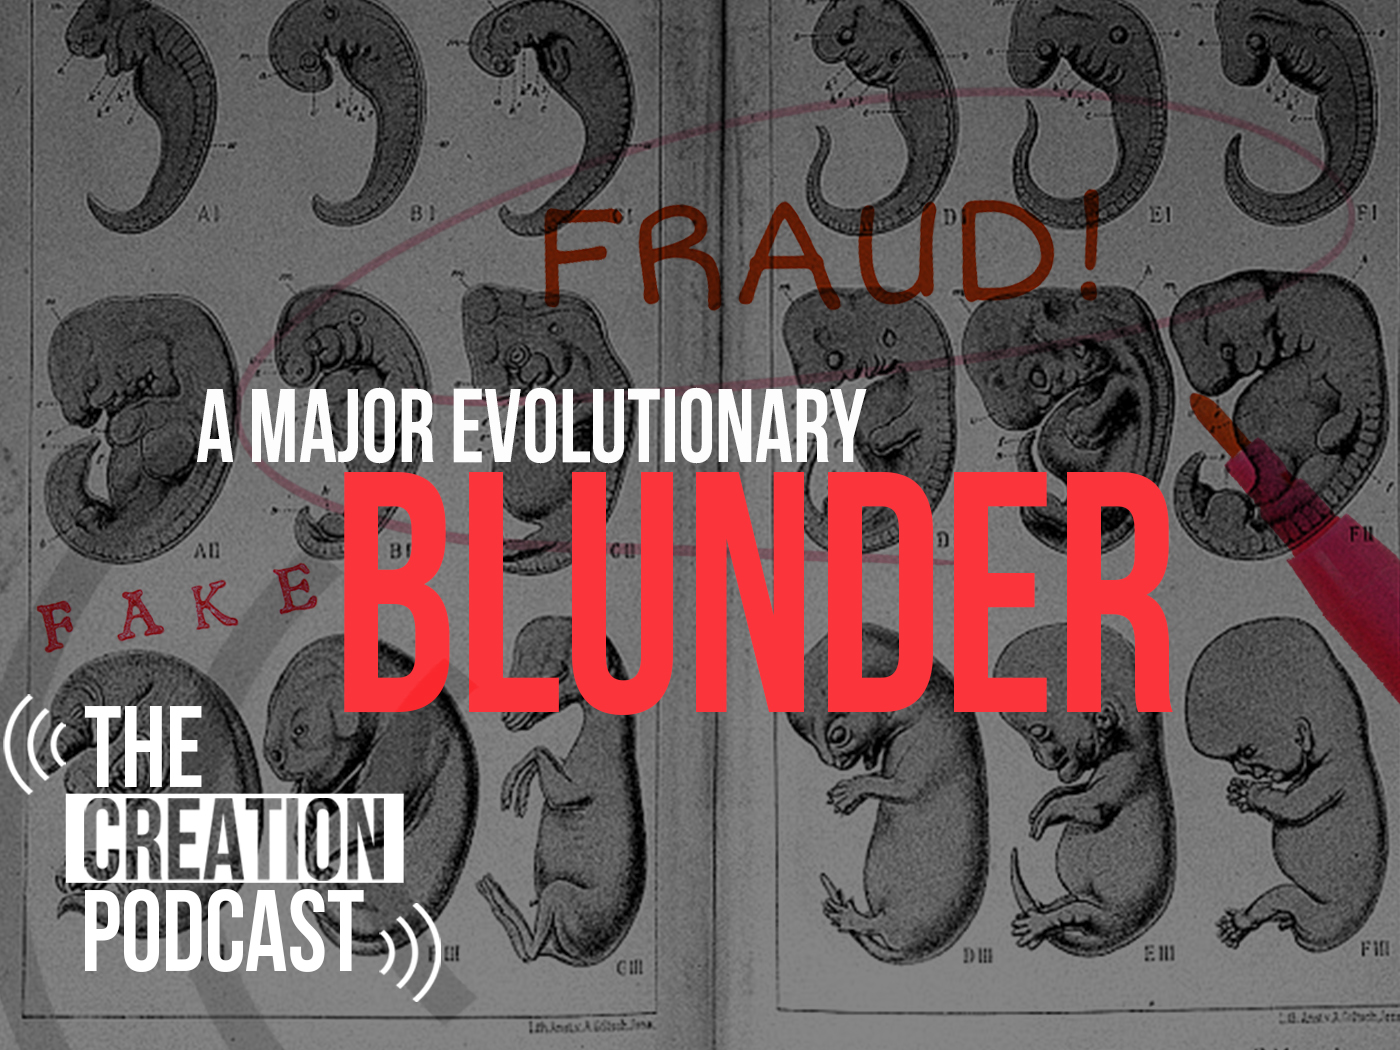 Ernst Haeckel: Evolutionary Huckster | The Creation Podcast: Episode 71